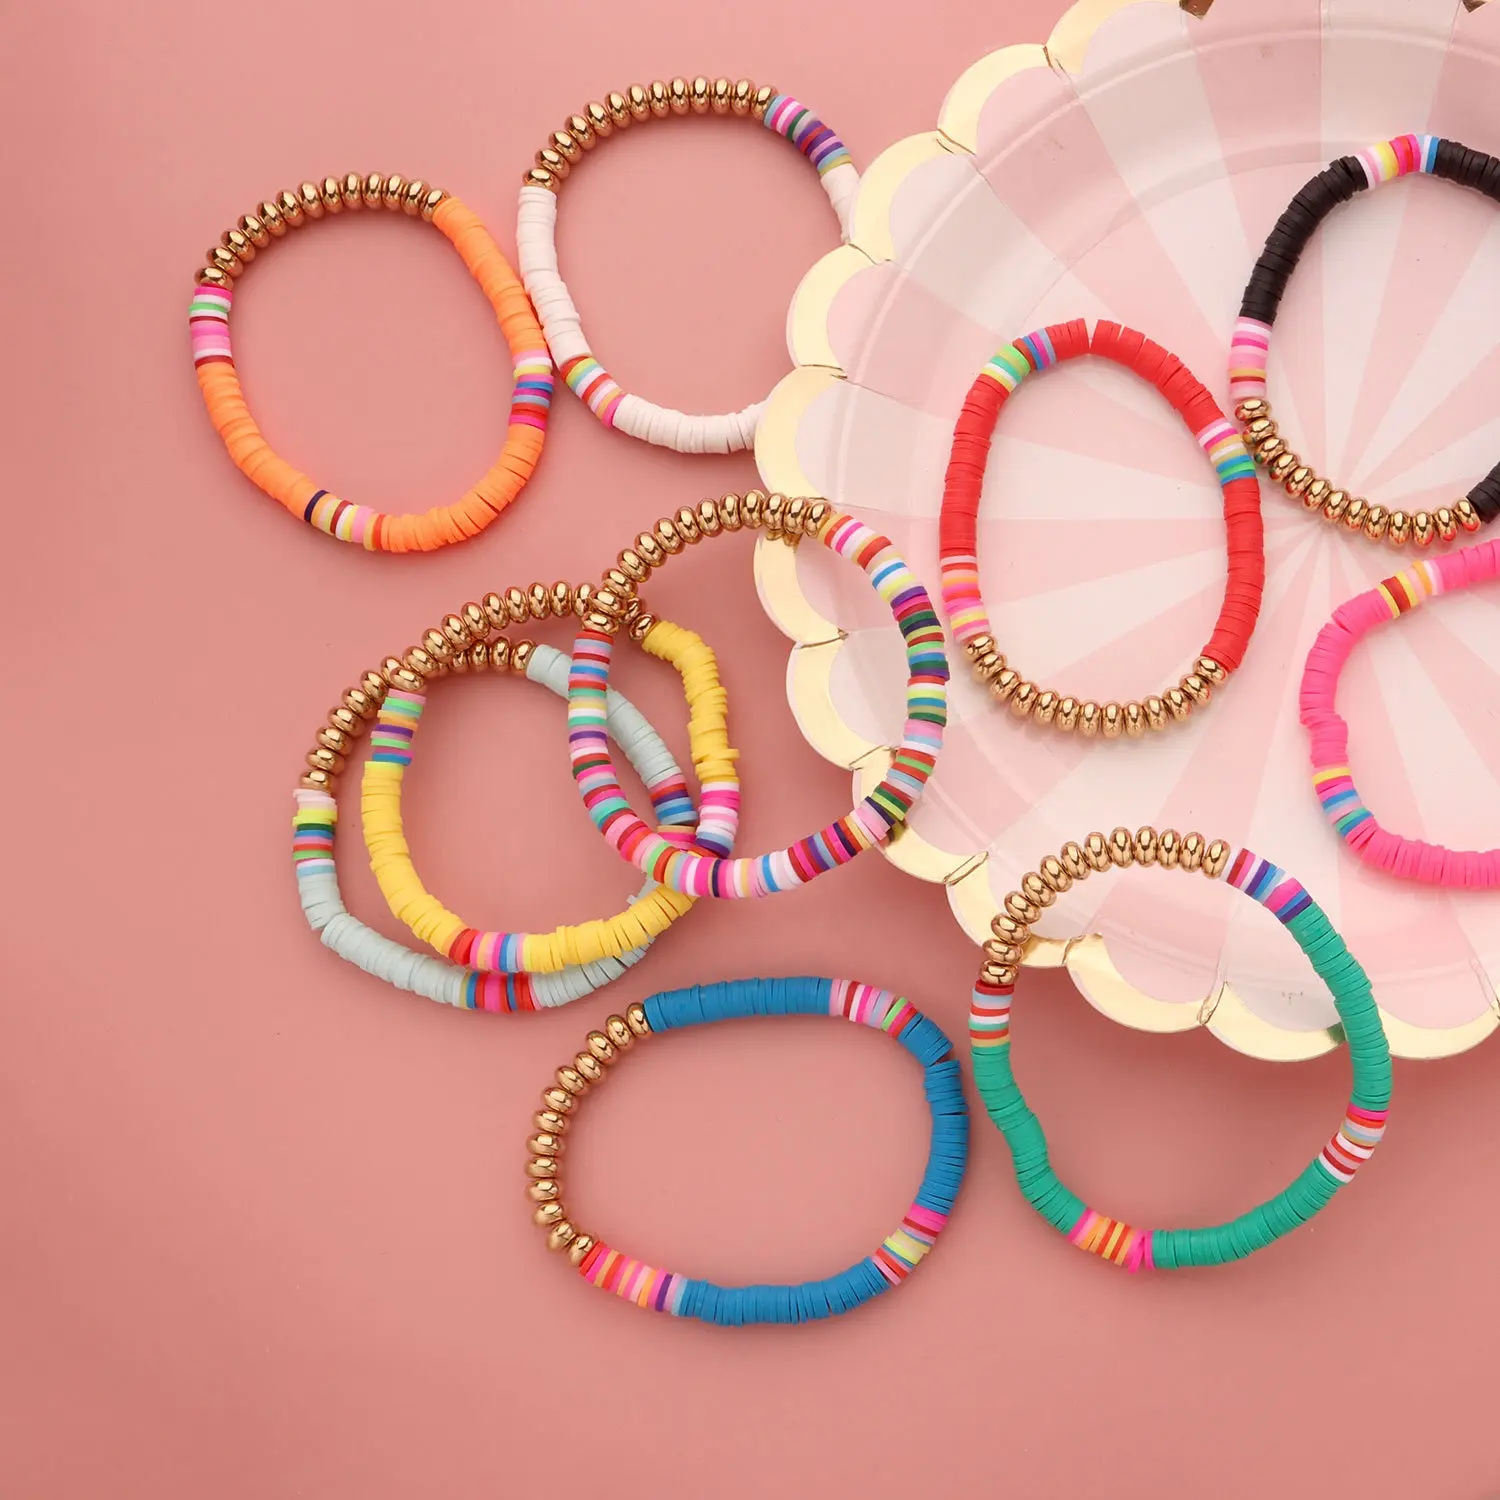 Pulseira feminina maleável, bracelete estampado colorido com contas soltas, disco de polímero macio, argila e pulseira